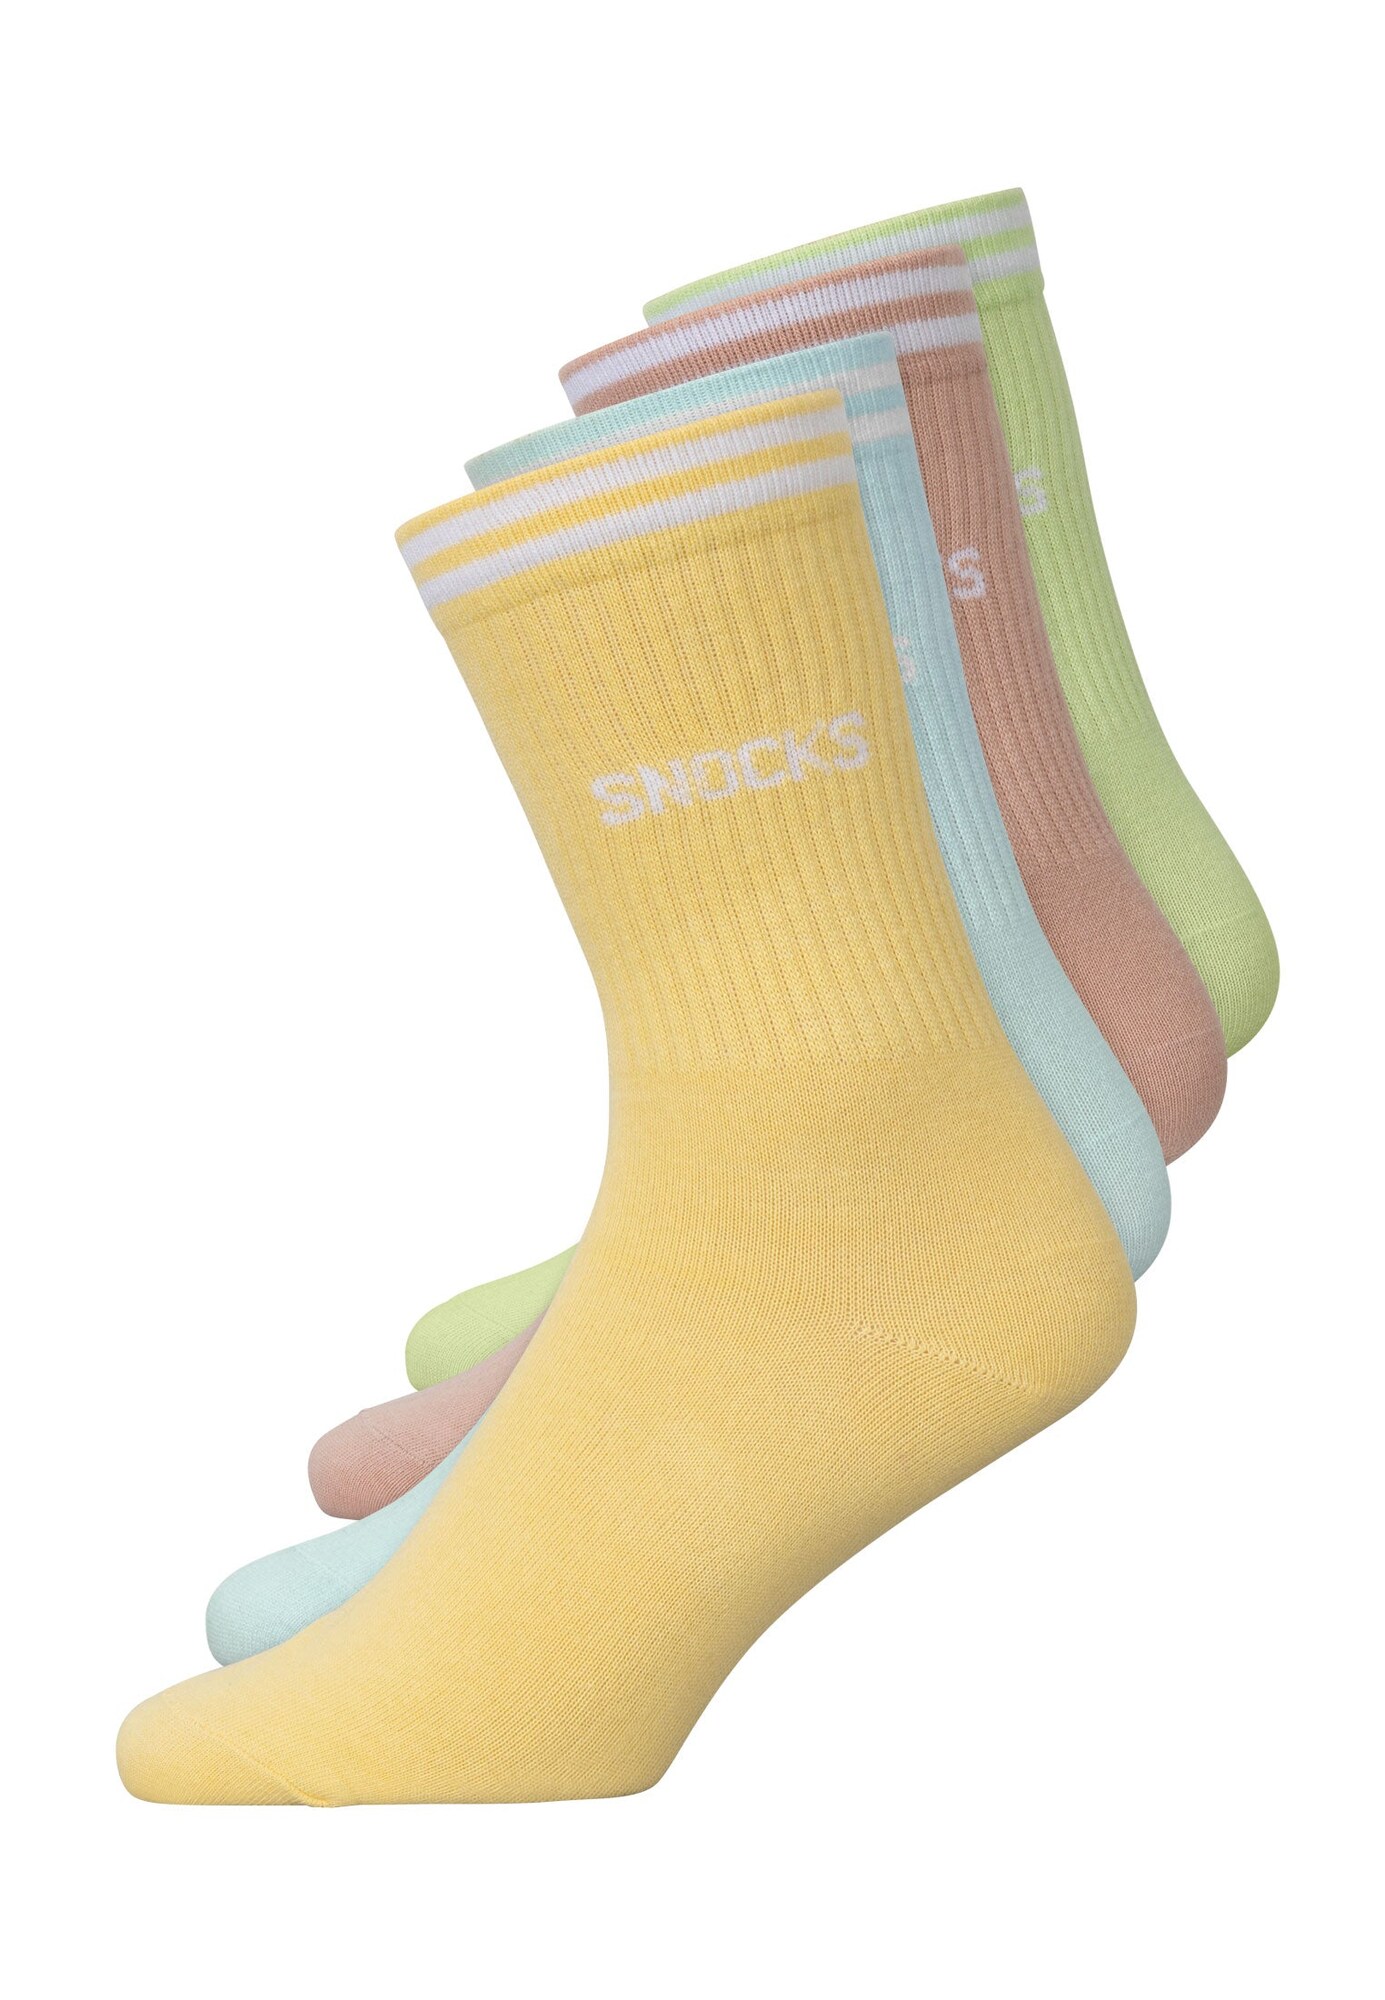 SNOCKS Socken gelb / hellblau / grn